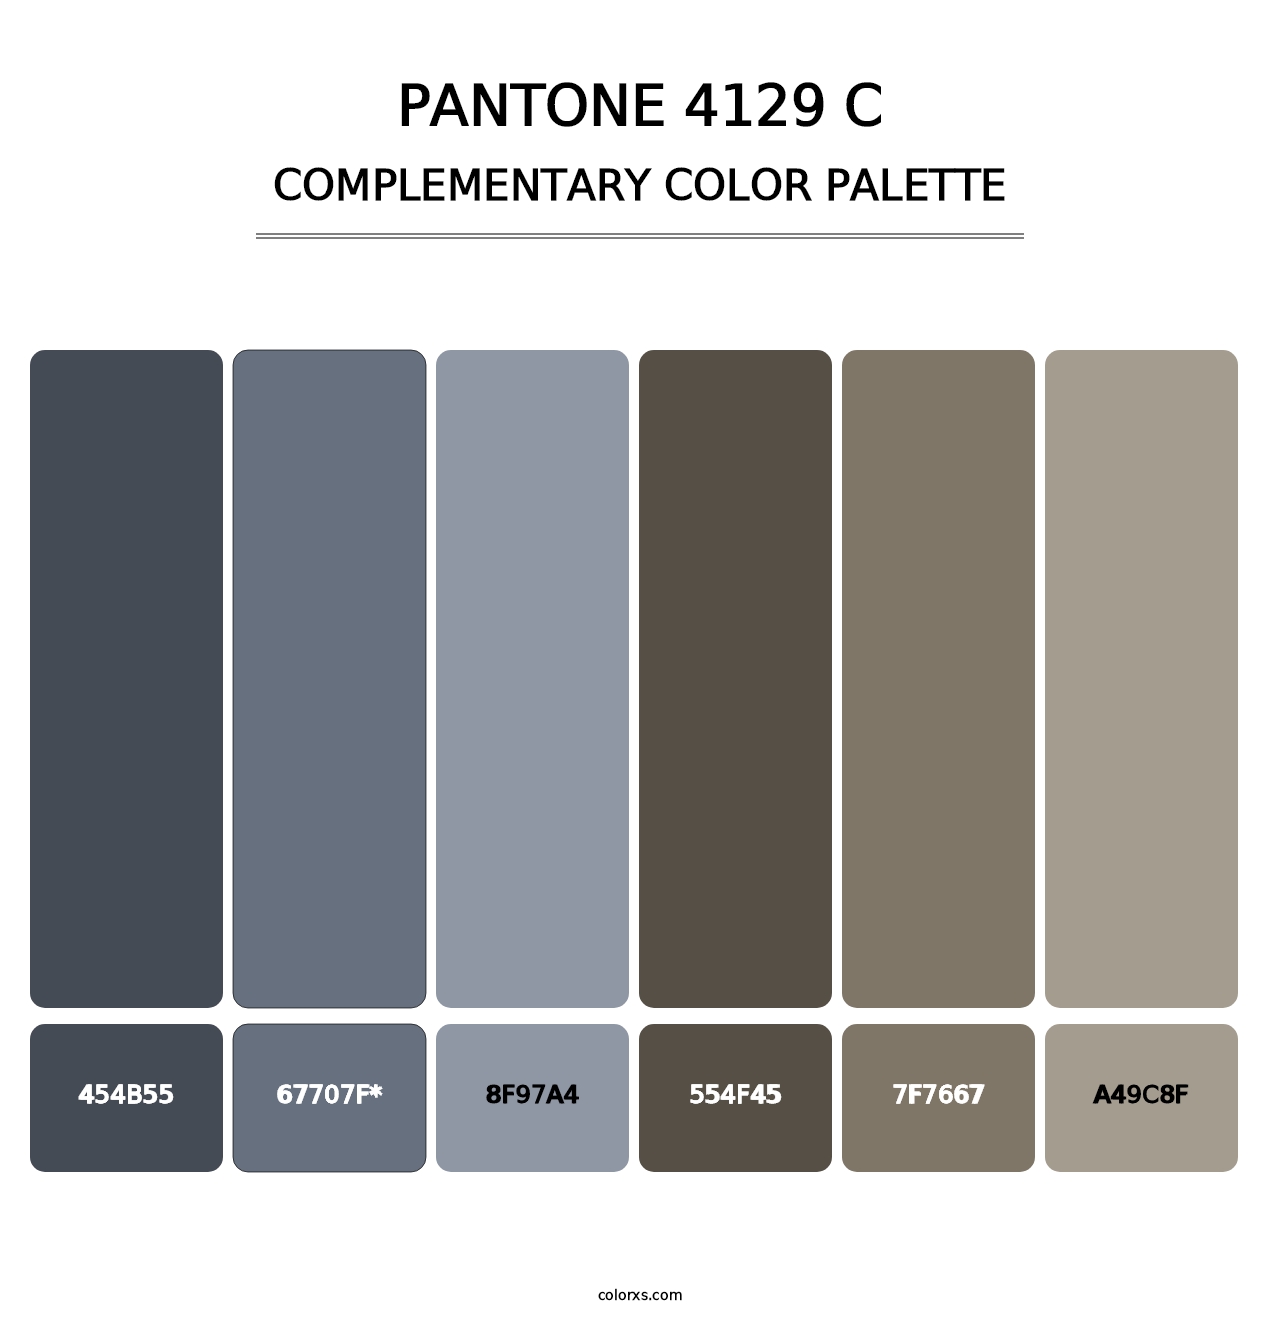 PANTONE 4129 C - Complementary Color Palette